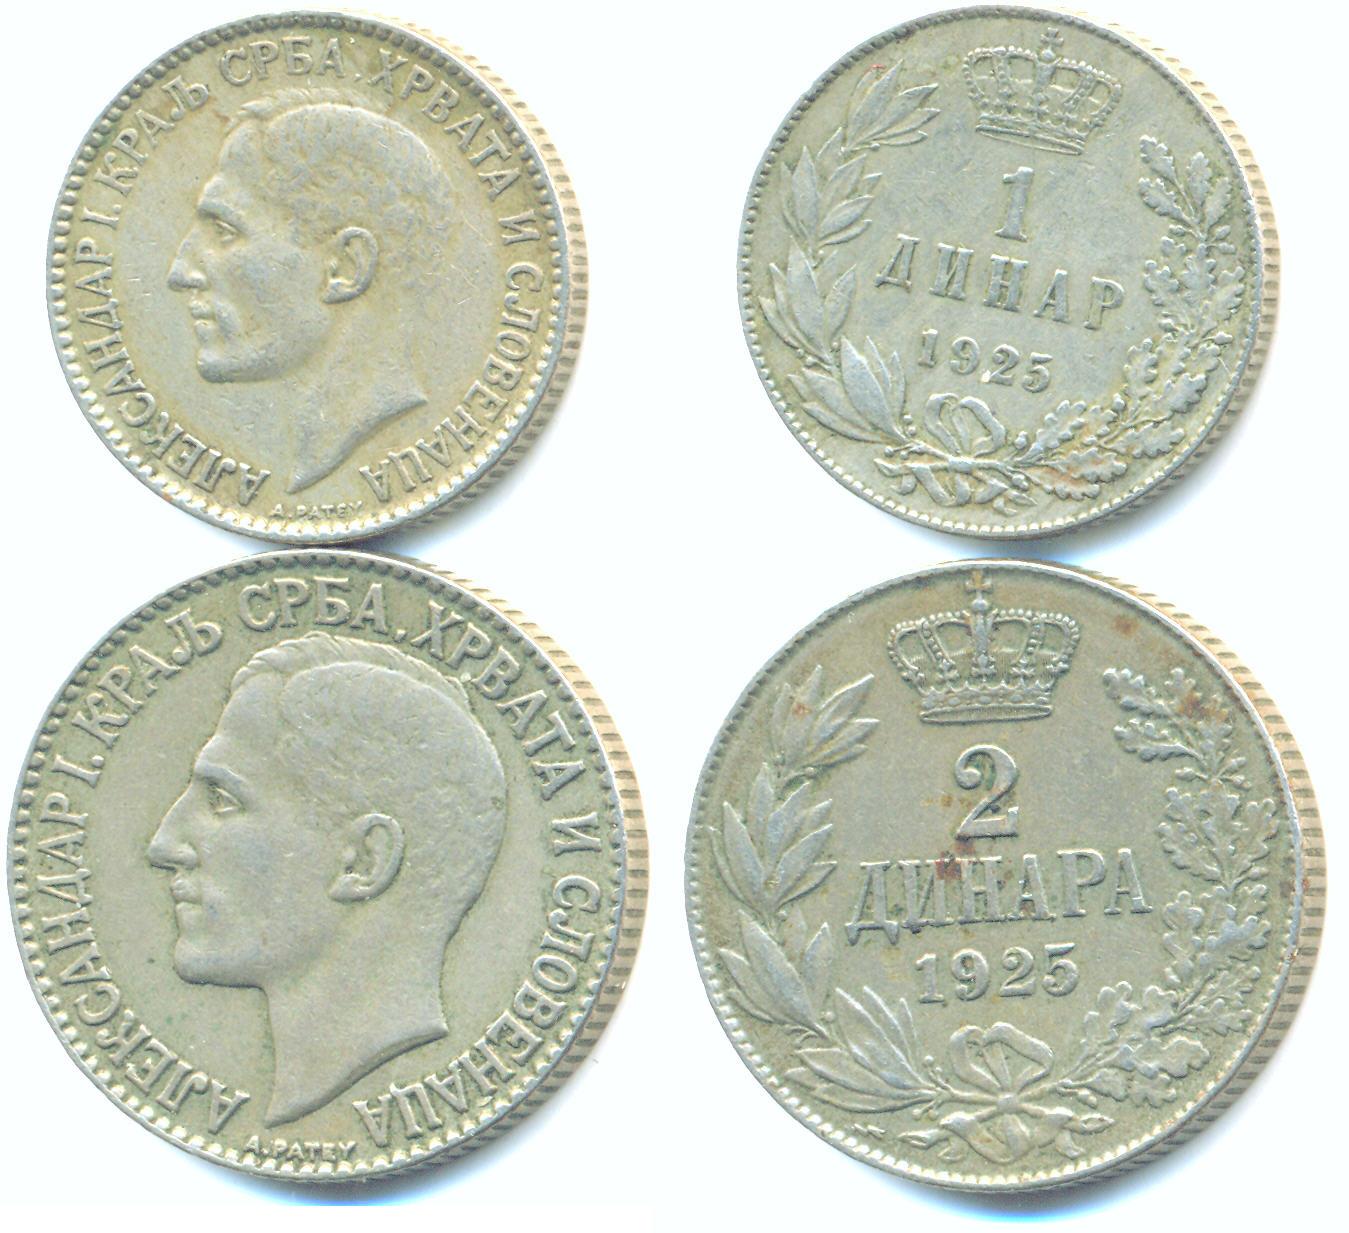 Foto Jugoslawien: 1 + 2 Coinsa Alexander I, 1925,